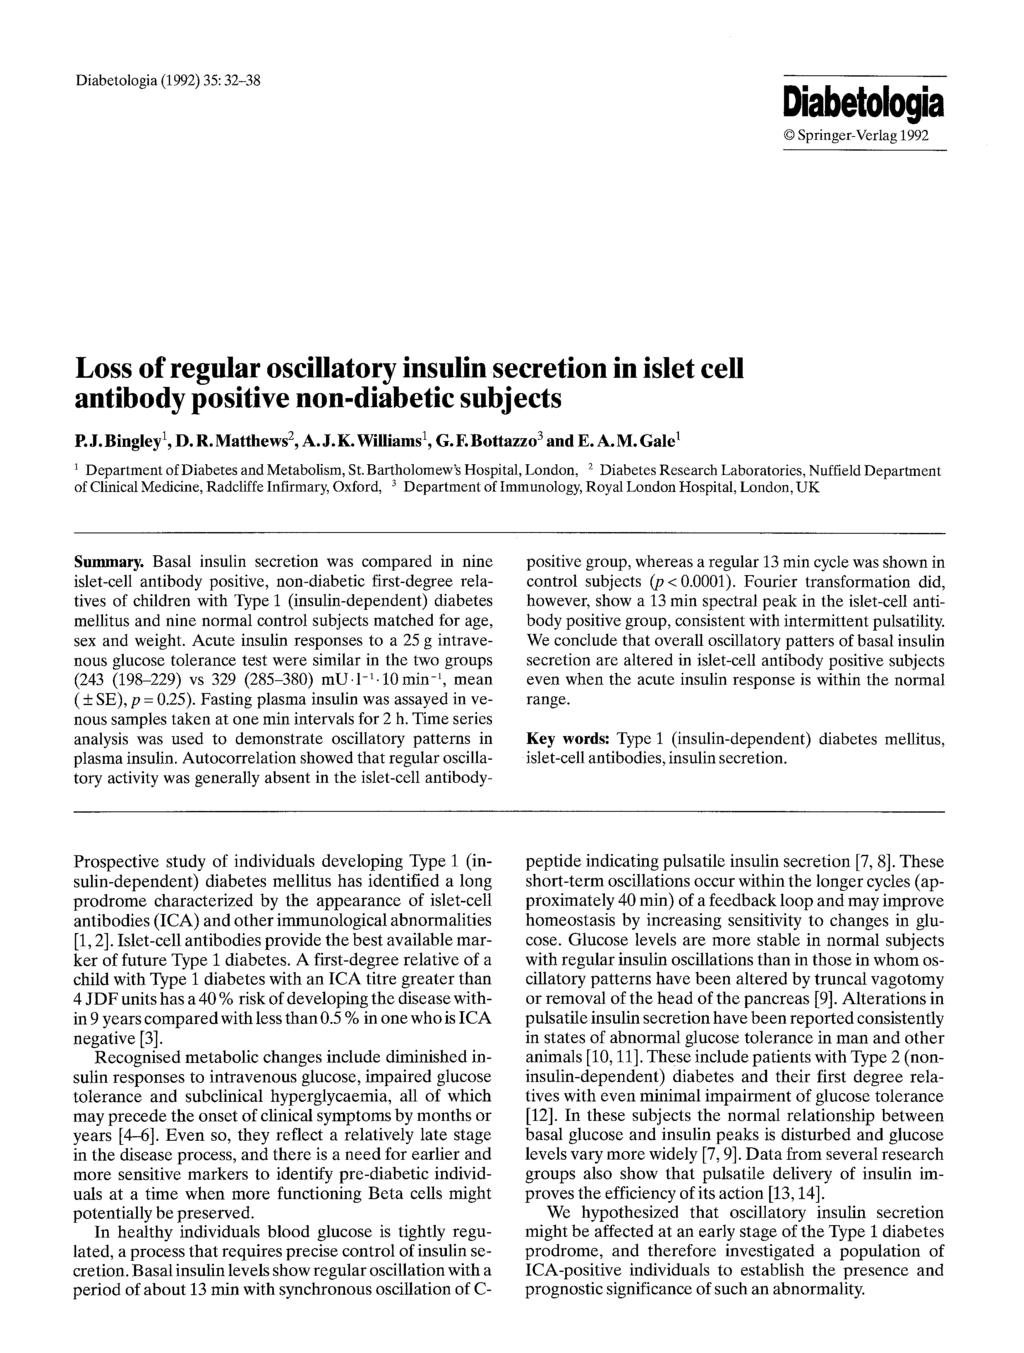 Diabetologia (992) 35:32-38 Diabetologia 9 Springer-Verlag 992 Loss of regular oscillatory insulin secretion in islet cell antibody positive non-diabetic subjects P. J. Bingley, D. R. Matthews 2, A.